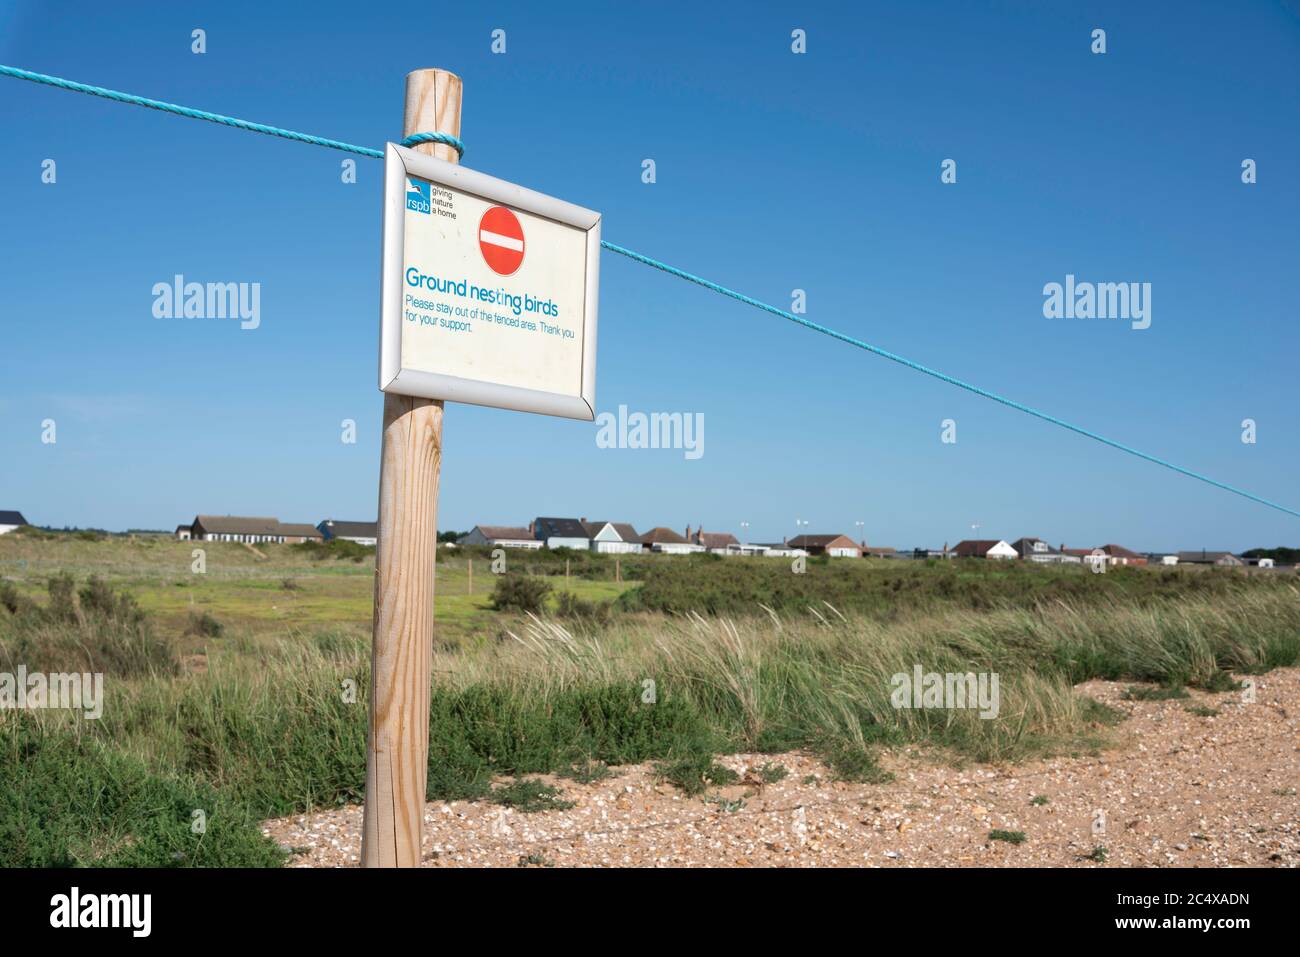 Snettisham Nature Reserve, view of an RSPB sign urging caution in the vicinity of ground nesting birds, Snettisham beach, Norfolk, England, UK Stock Photo